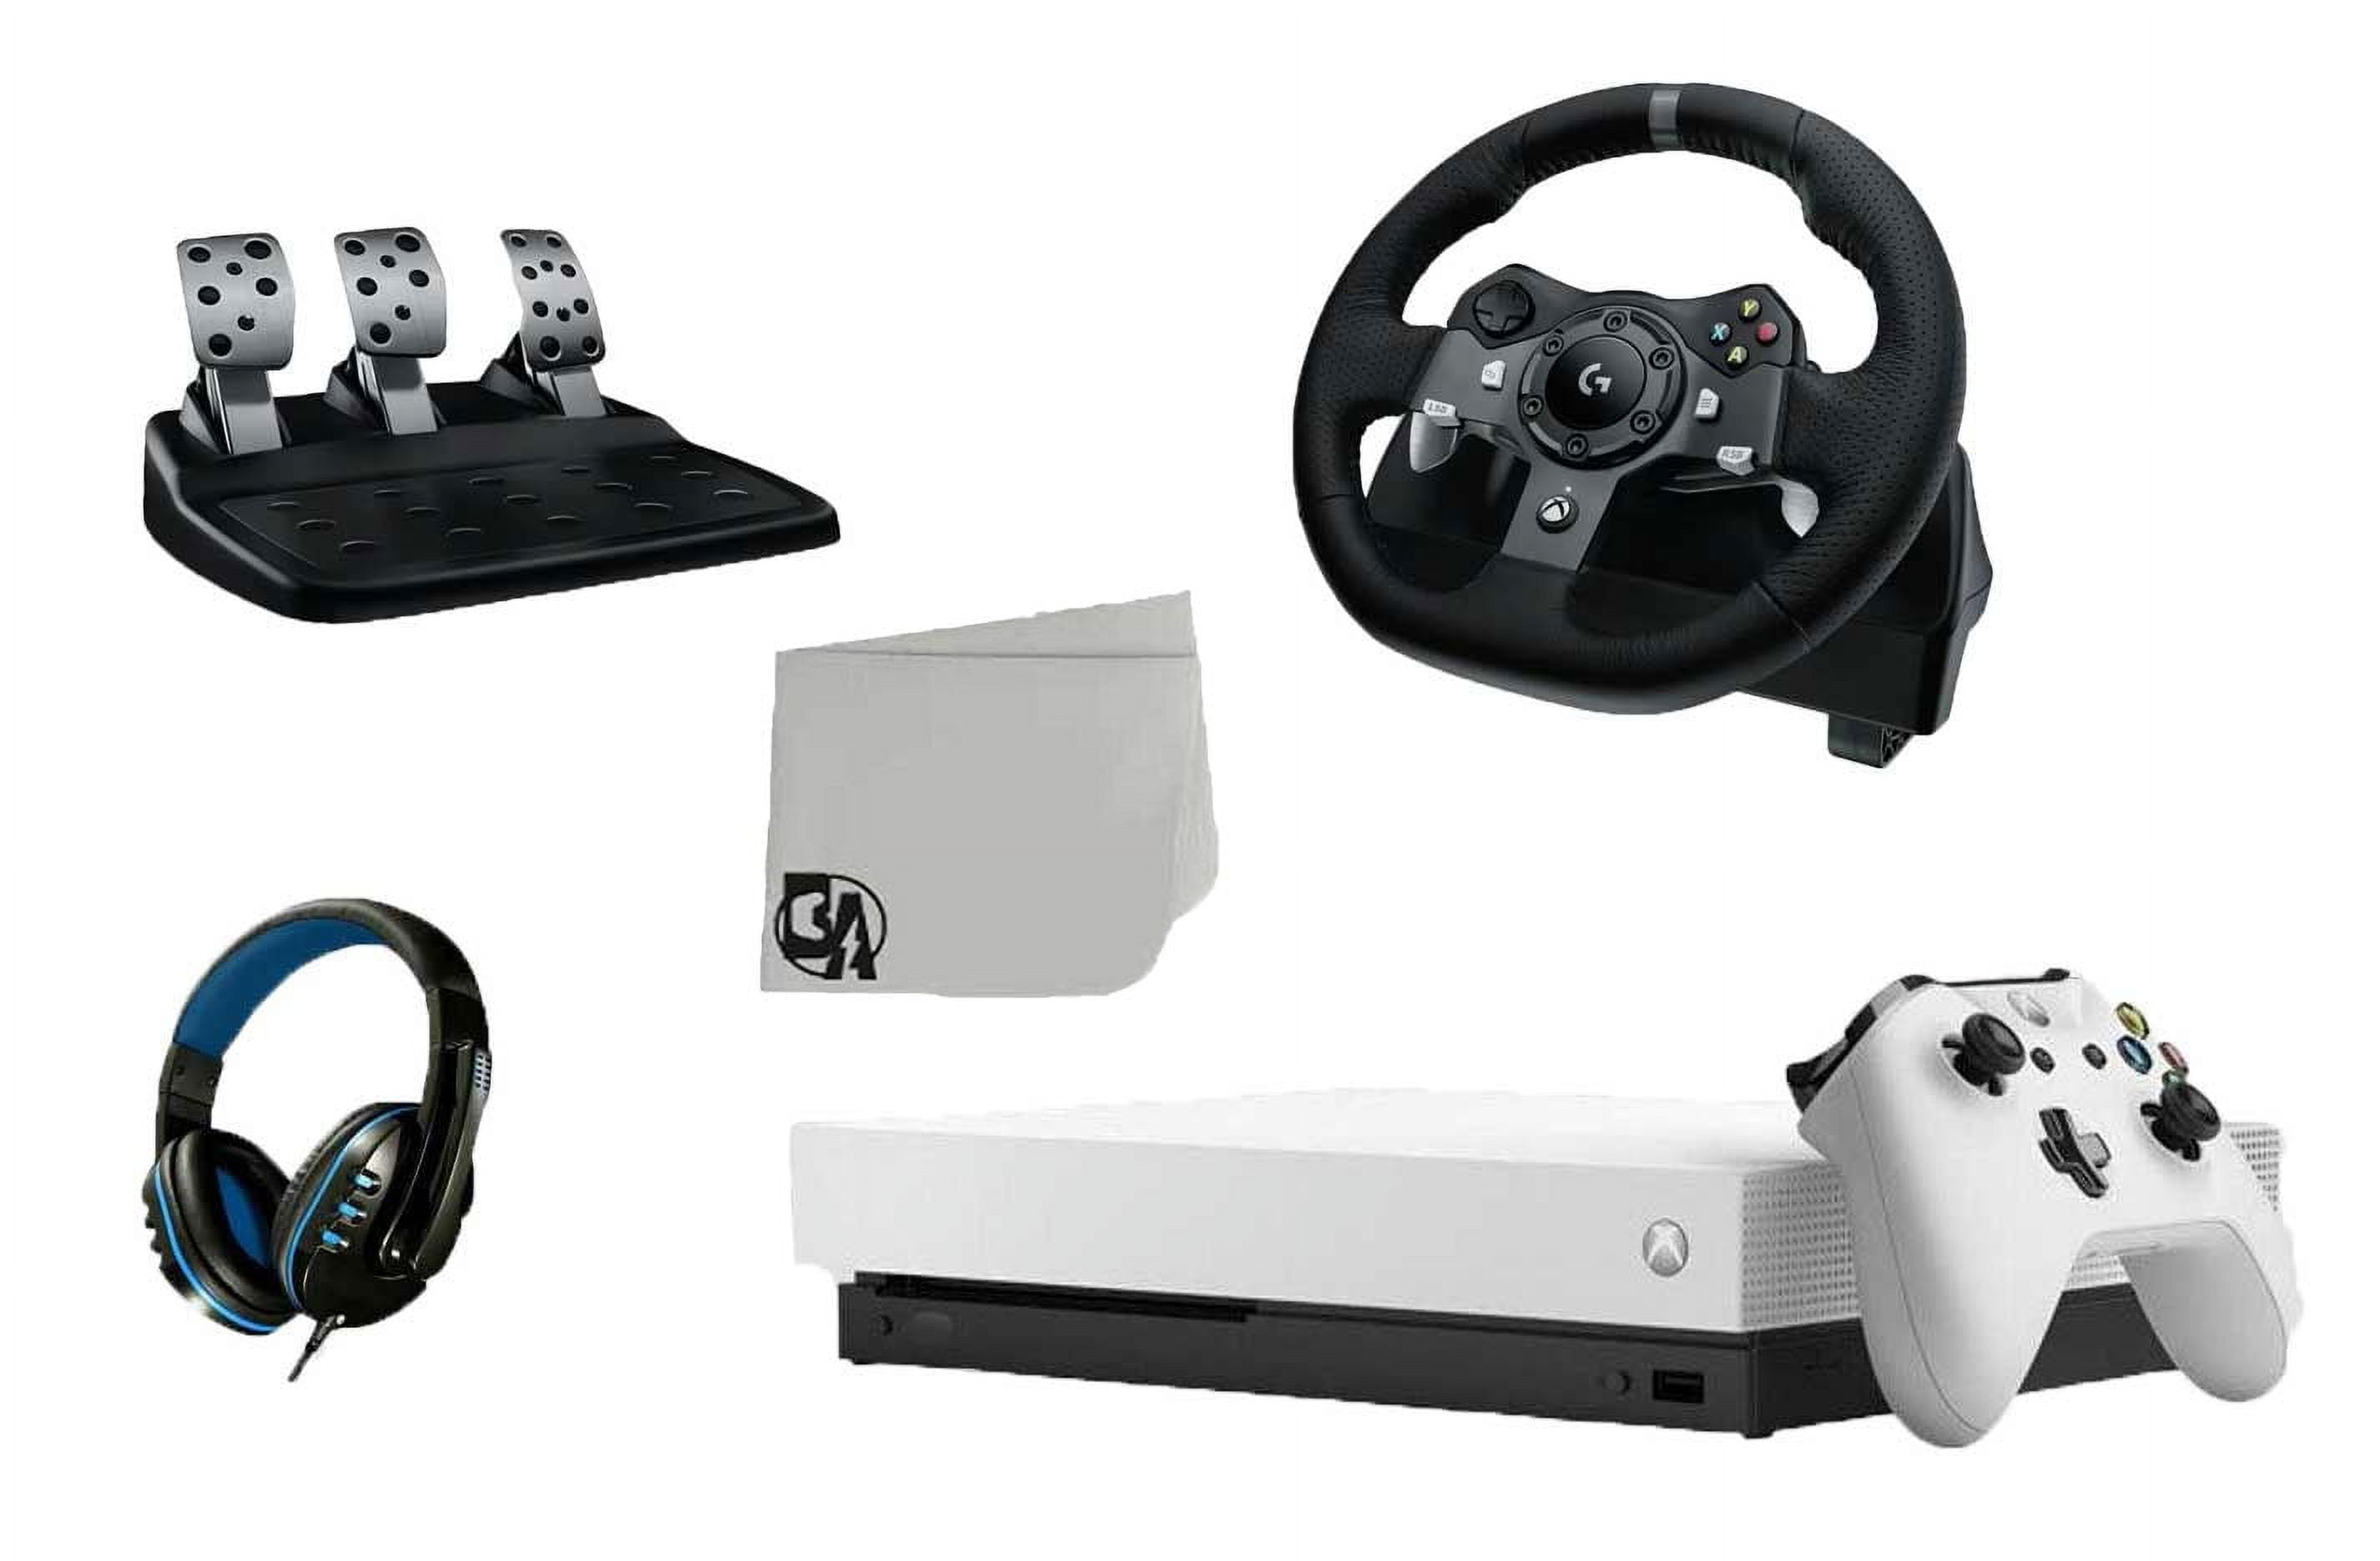 Xbox Series X 1TB Ulra Fast SSD Gaming Console with Logitech G920 Racing  Wheel Set & Forza Horizon 5 